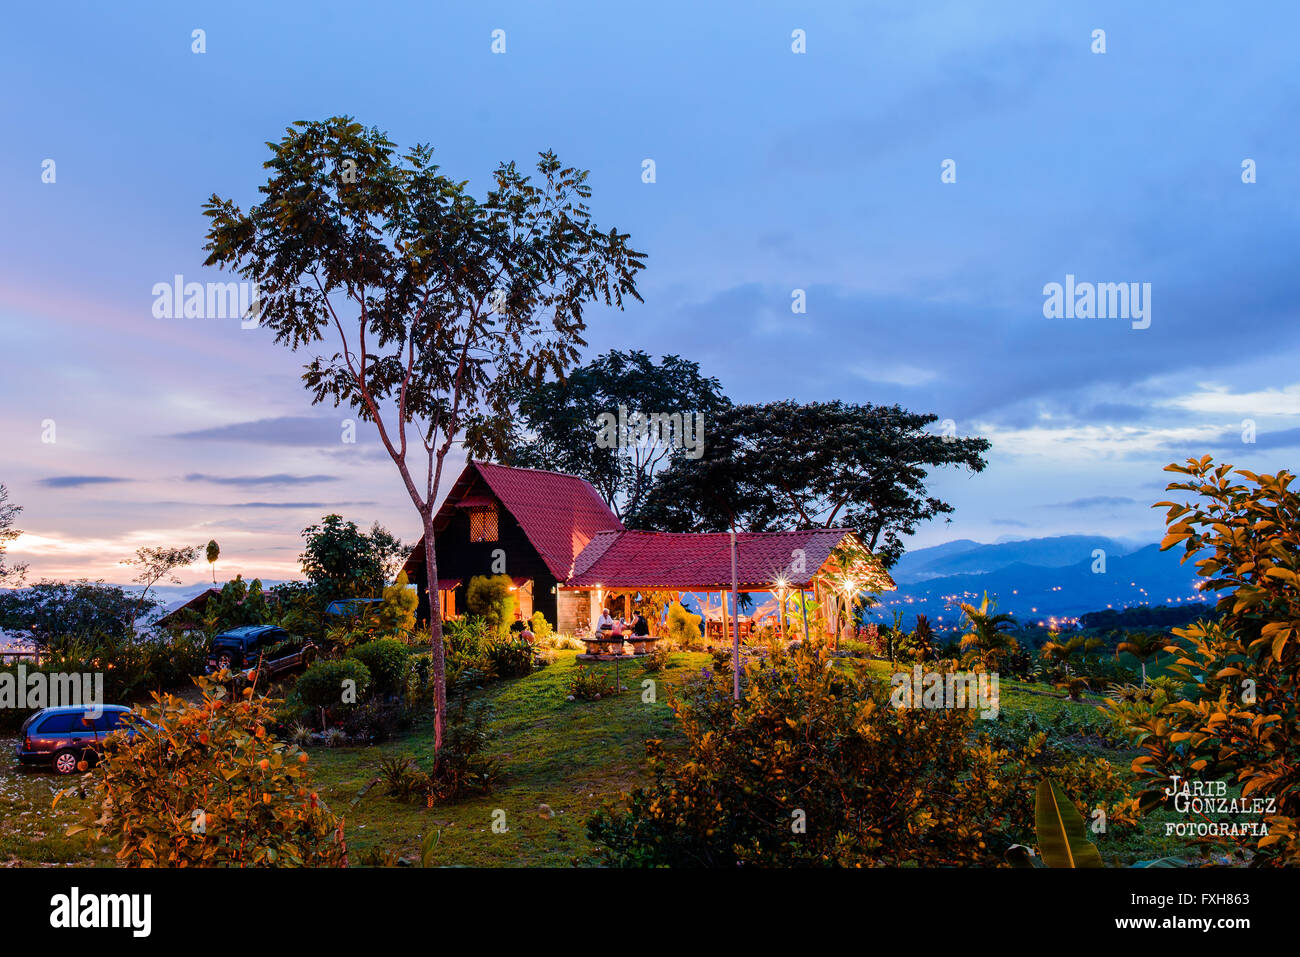 Sun setting in front of a hut in Santa Elena, Perez Zeledon, Costa Rica Stock Photo